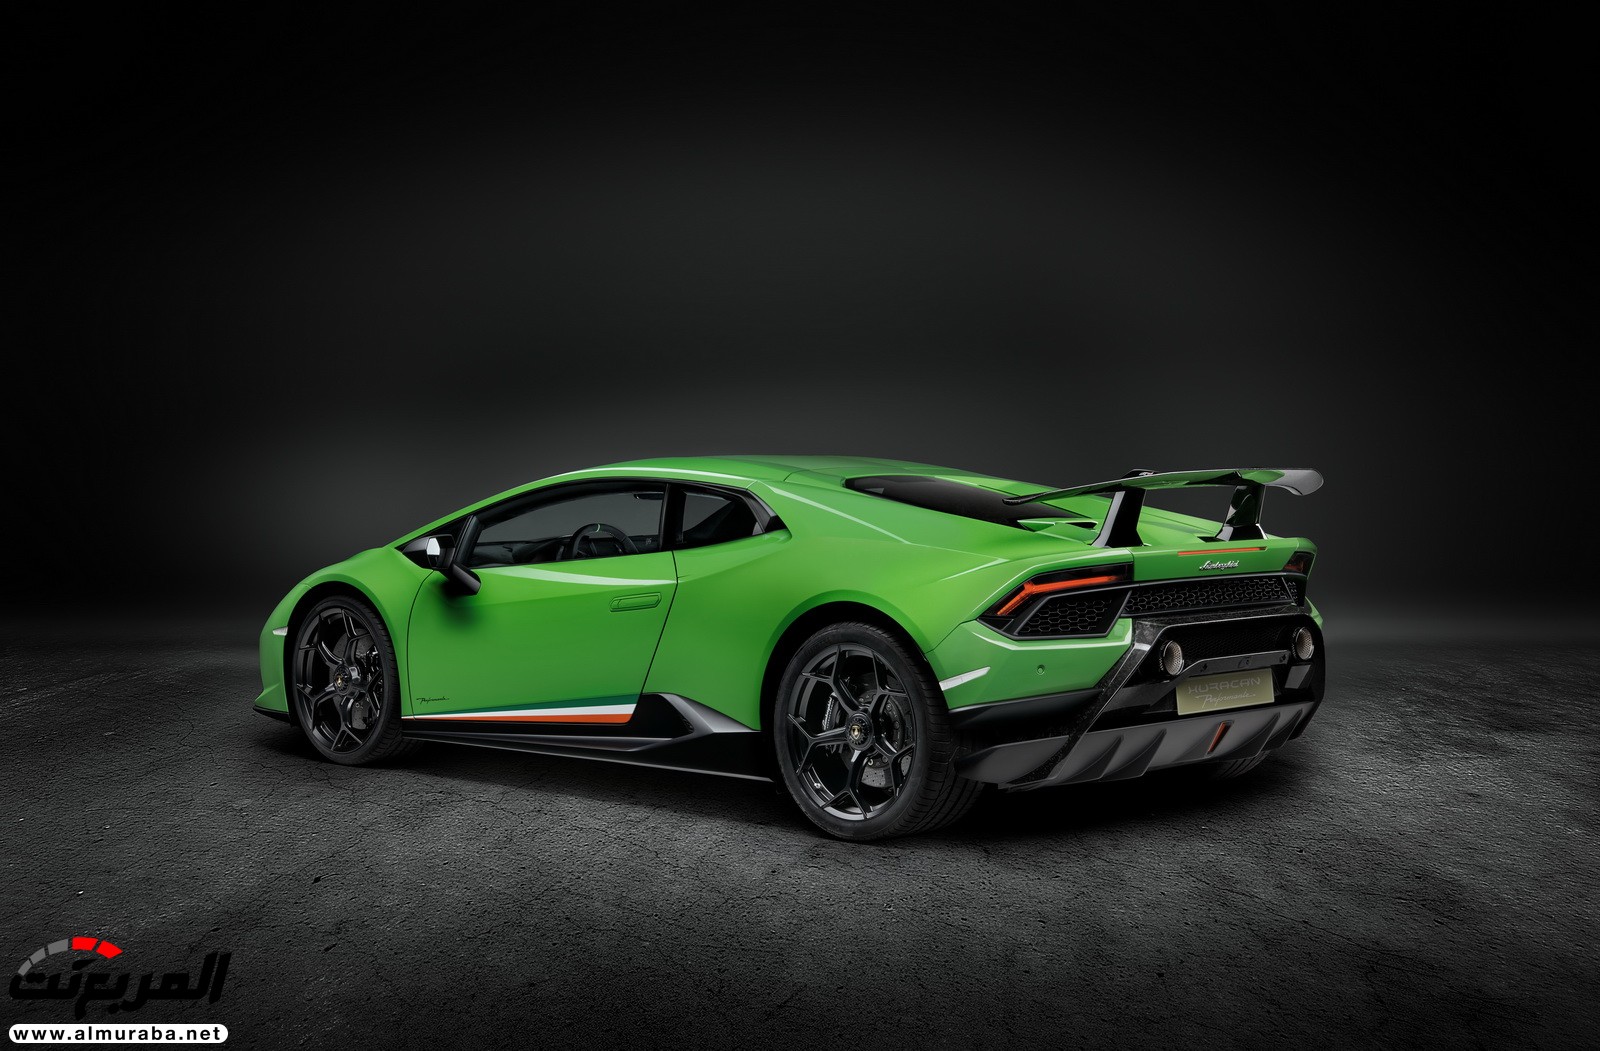 "لامبورجيني" هوراكان بيرفورمانتي يُكشف عنها بقوة 630 حصان "صور ومواصفات وأسعار" Lamborghini Huracan Performante 16